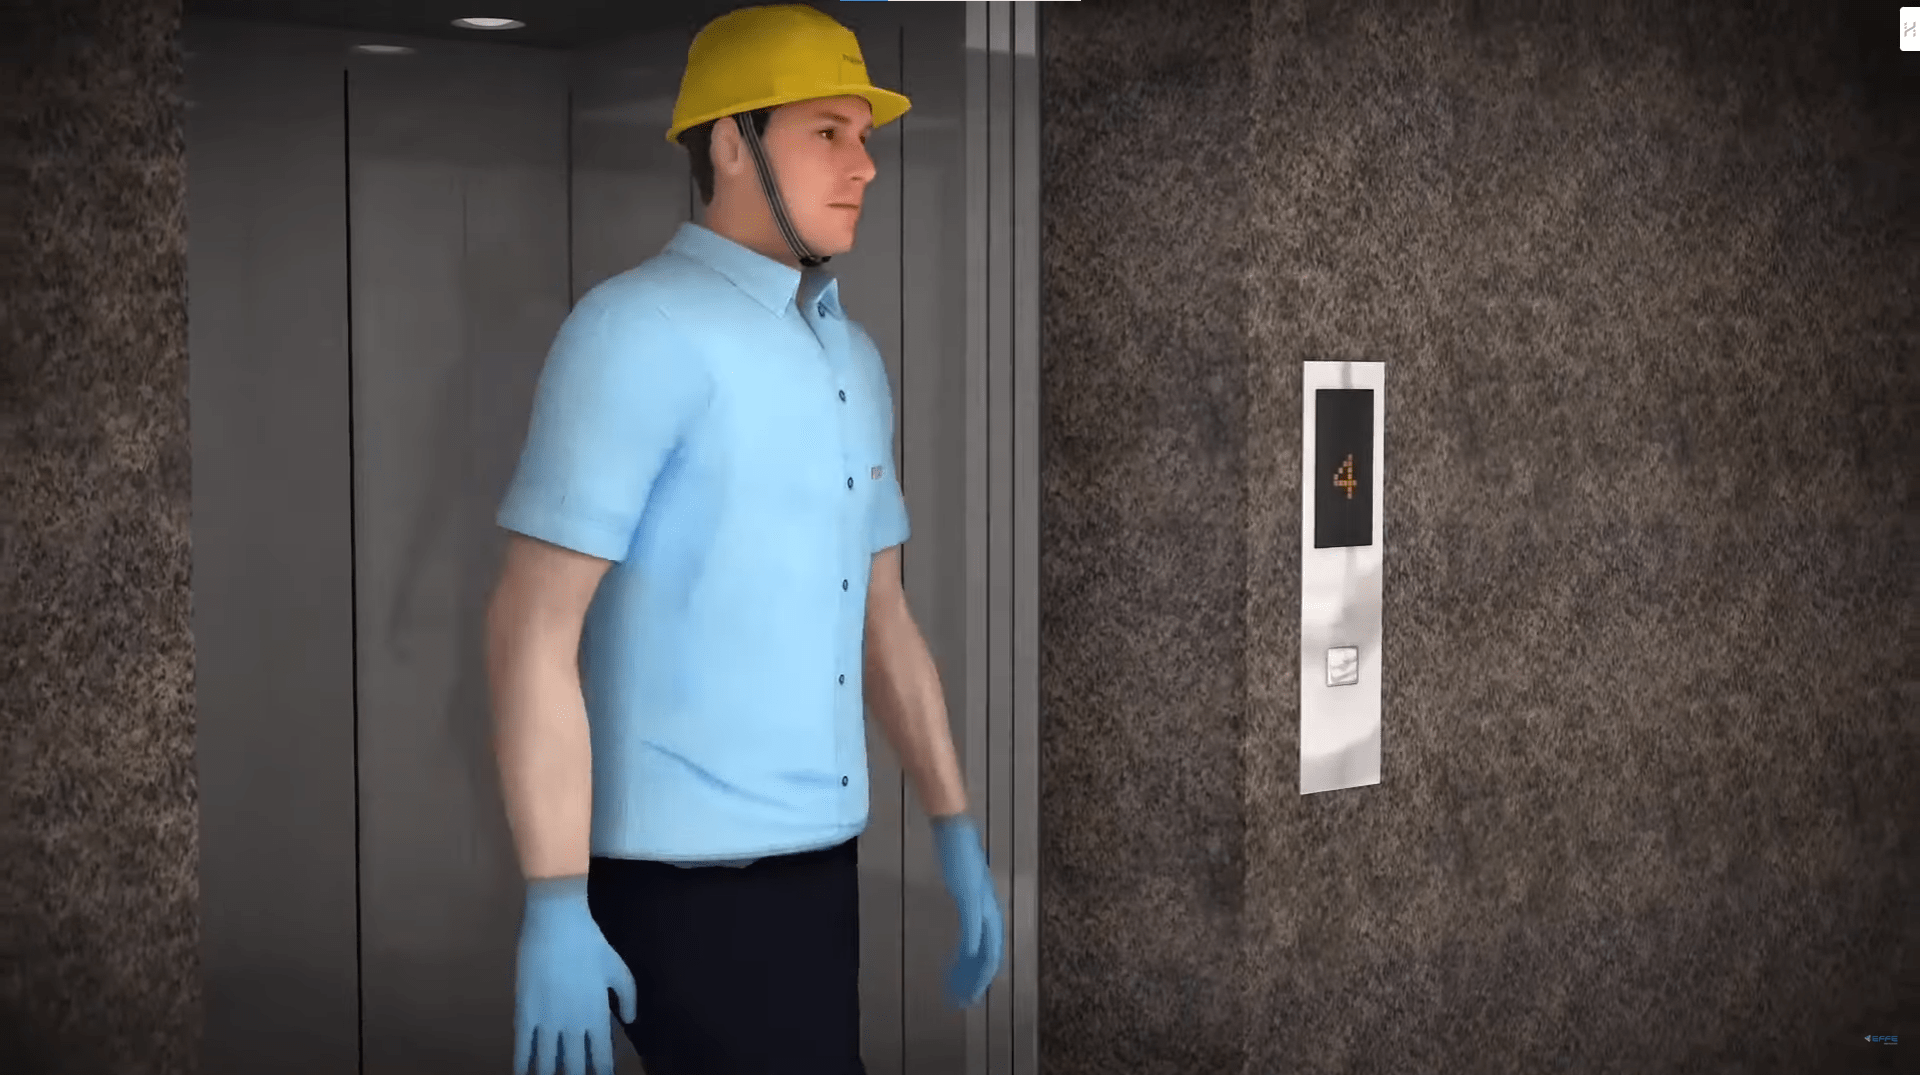 3D Elevator Animation Video